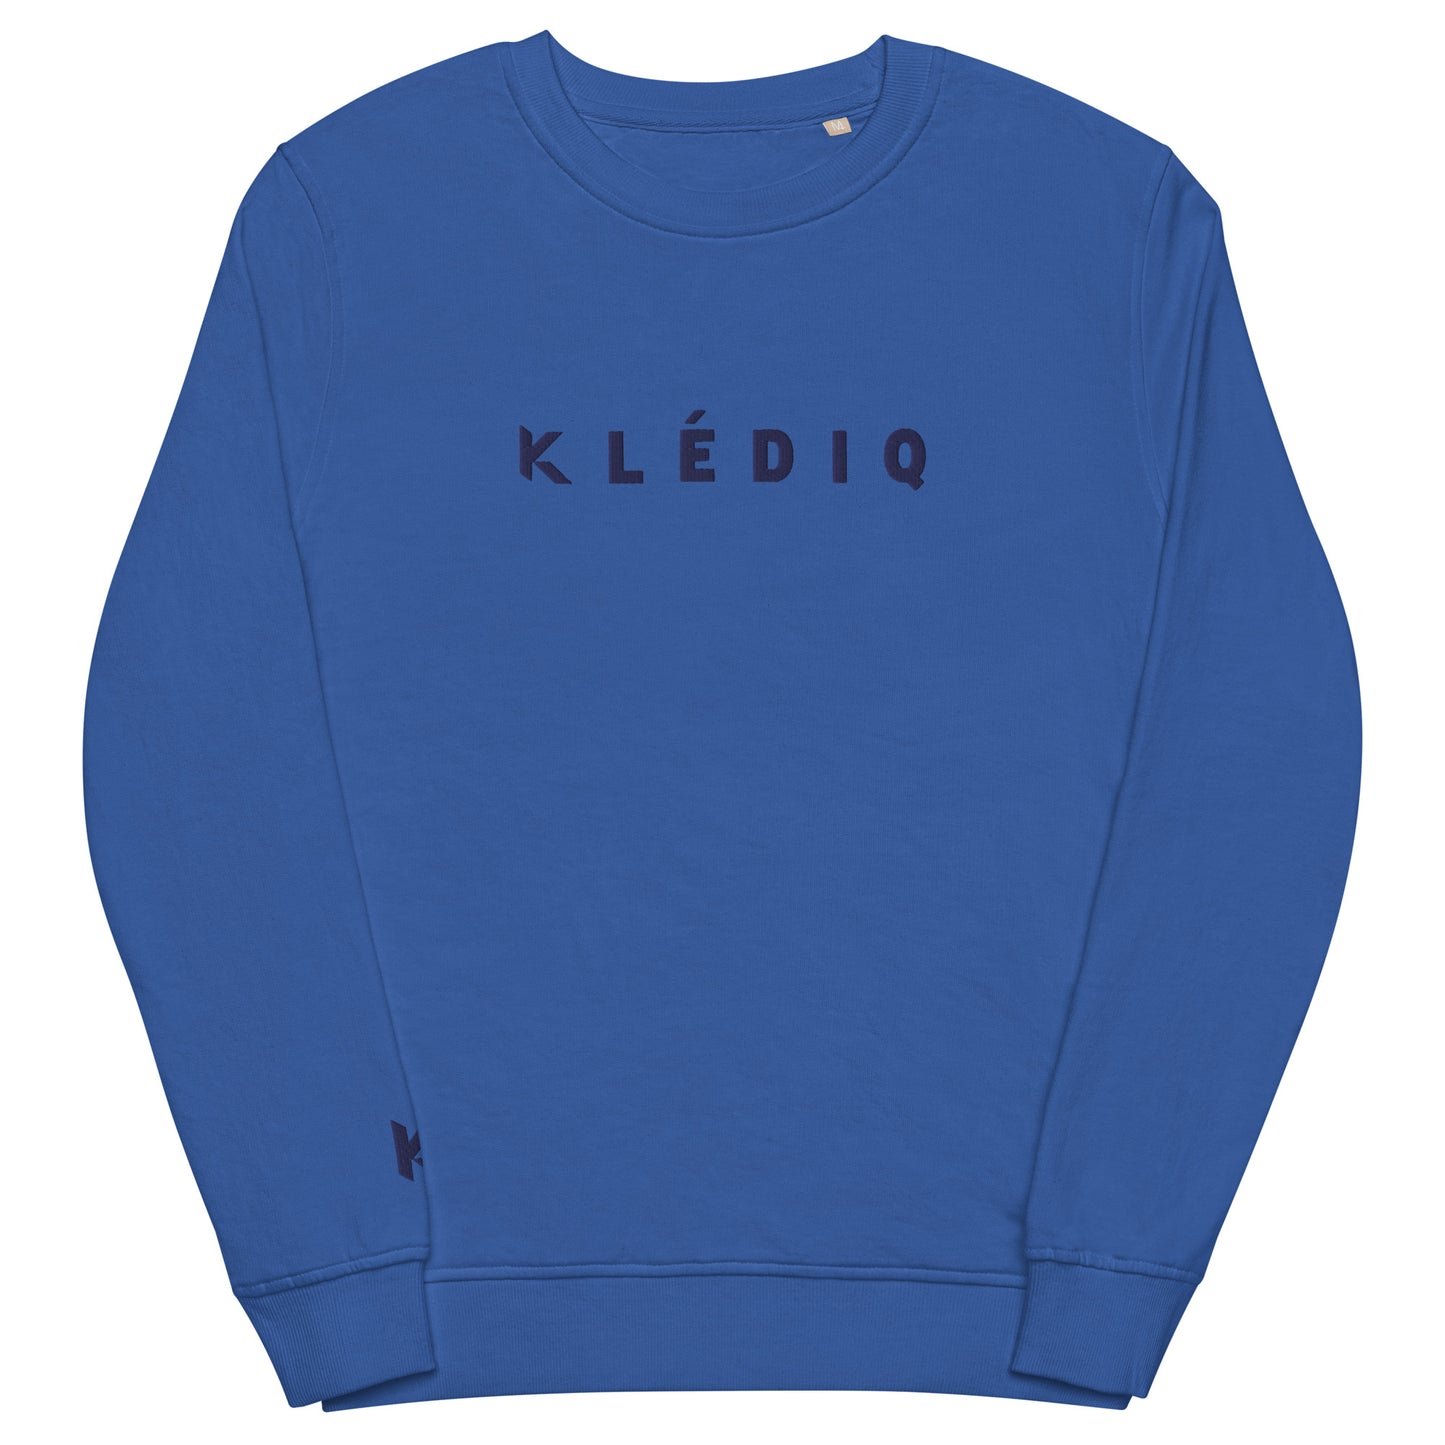 Klediq Sweatshirt / Royal Blue